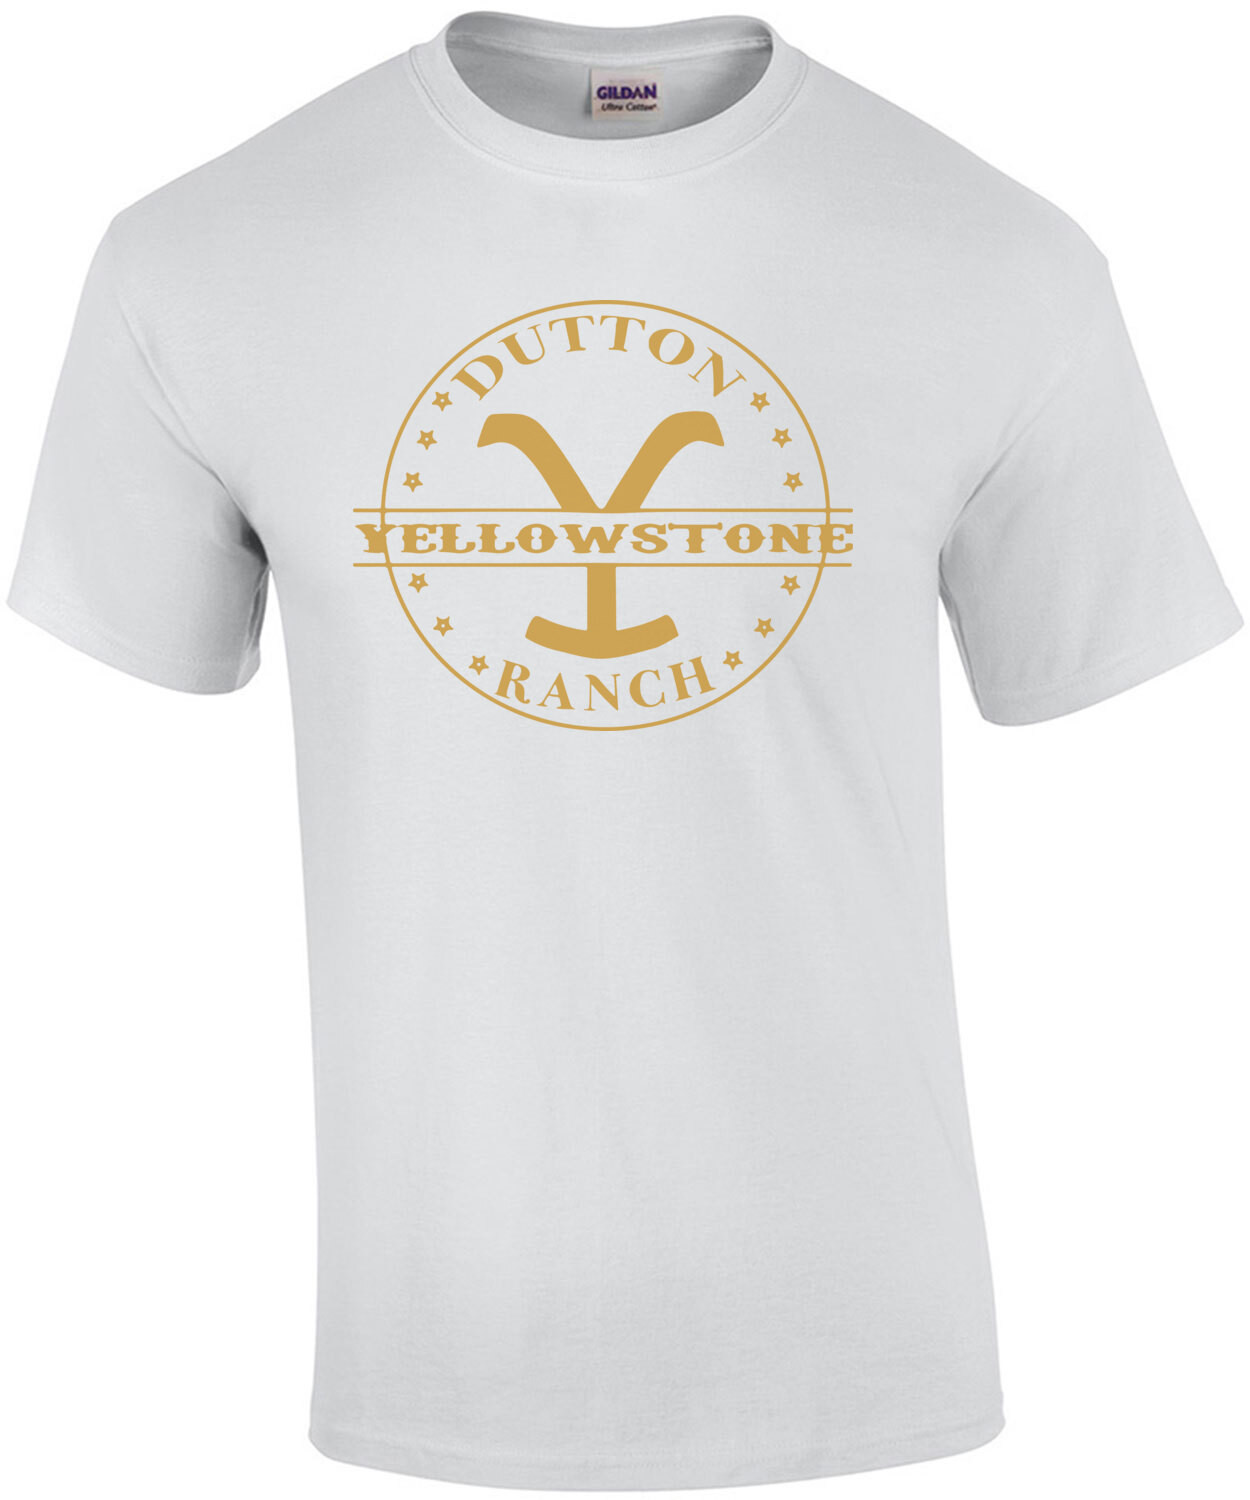 Dutton Ranch Yellowstone Logo